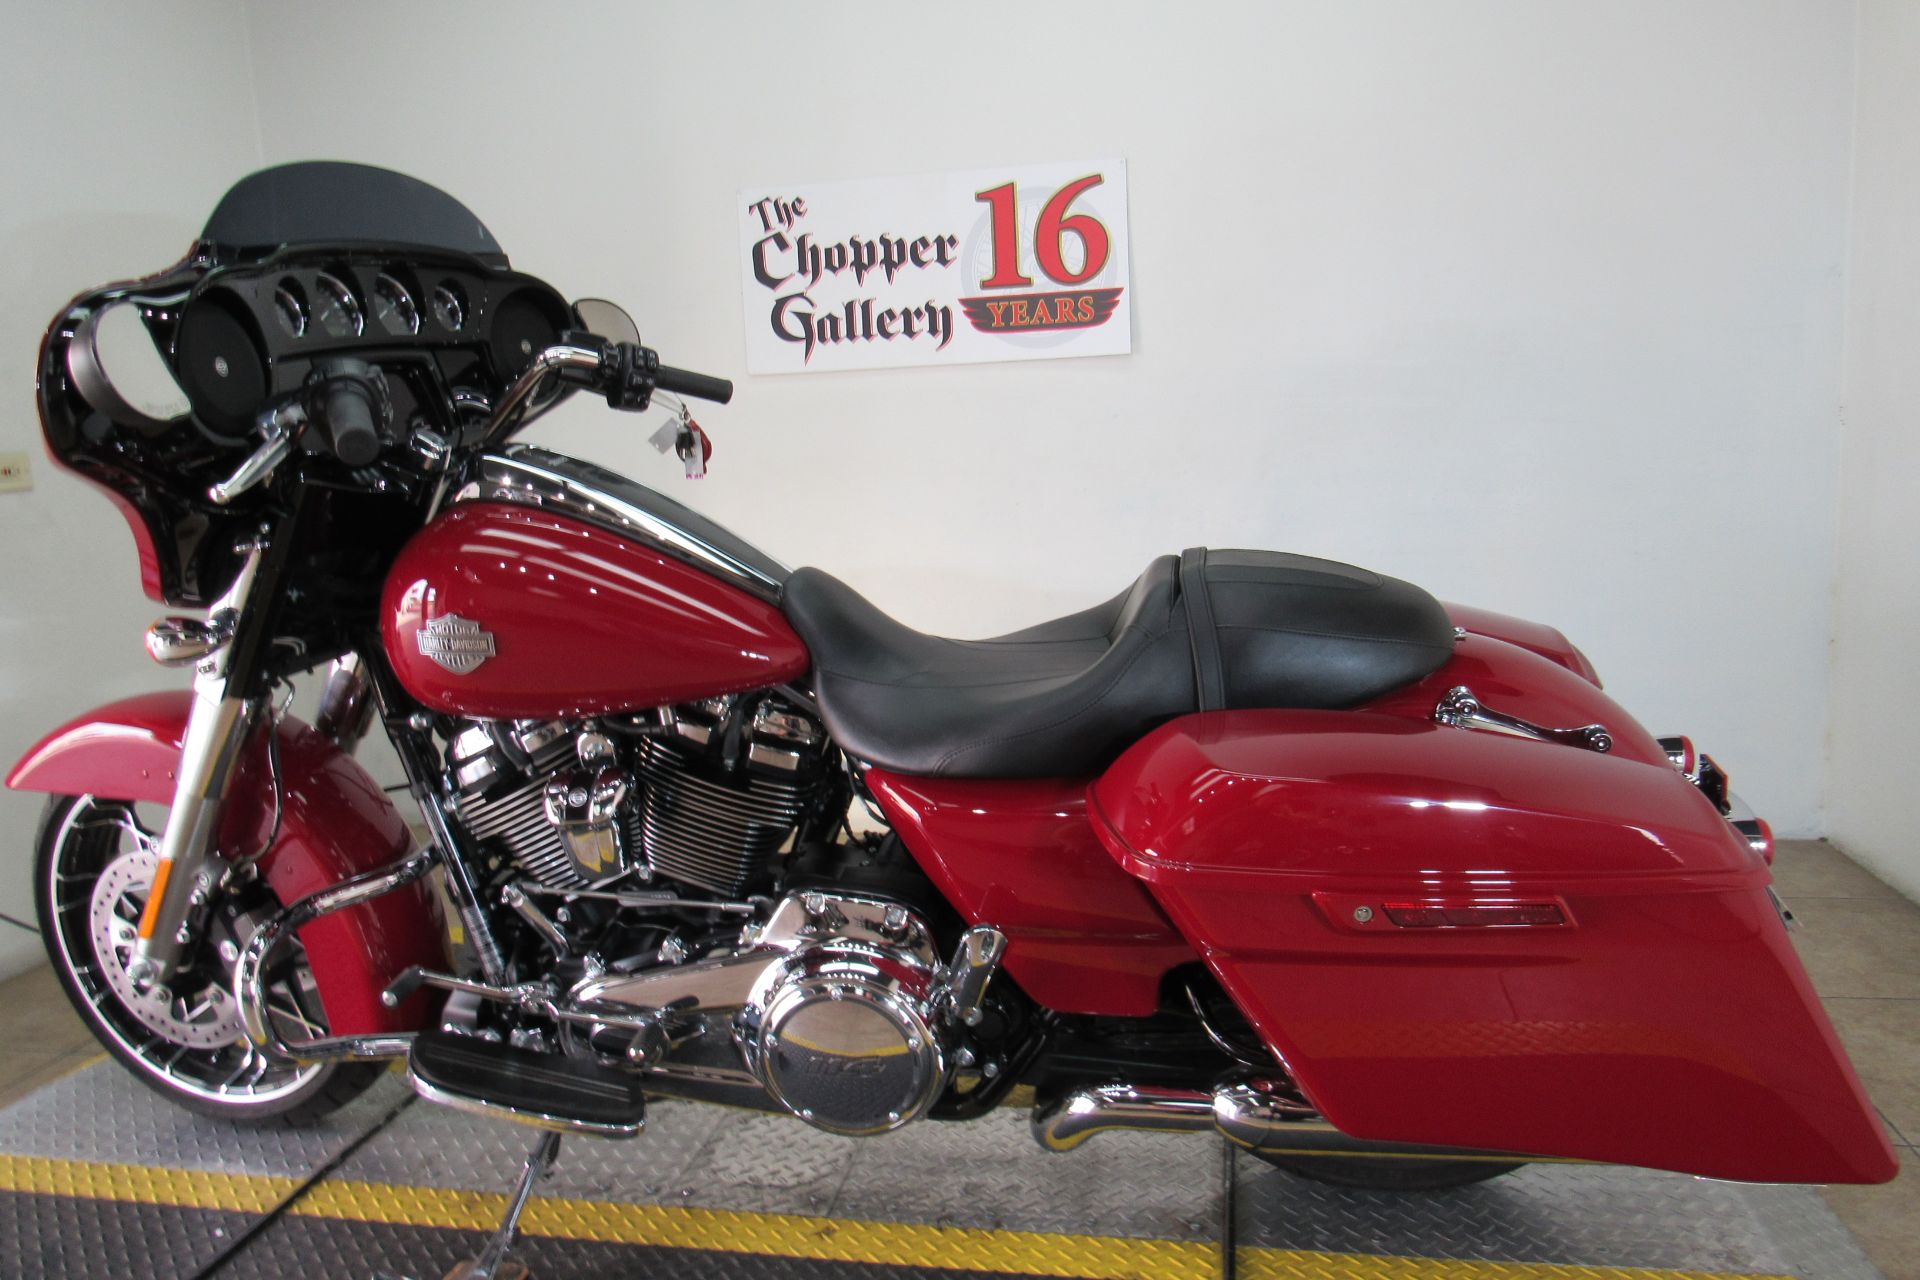 2021 Harley-Davidson Street Glide® Special in Temecula, California - Photo 10